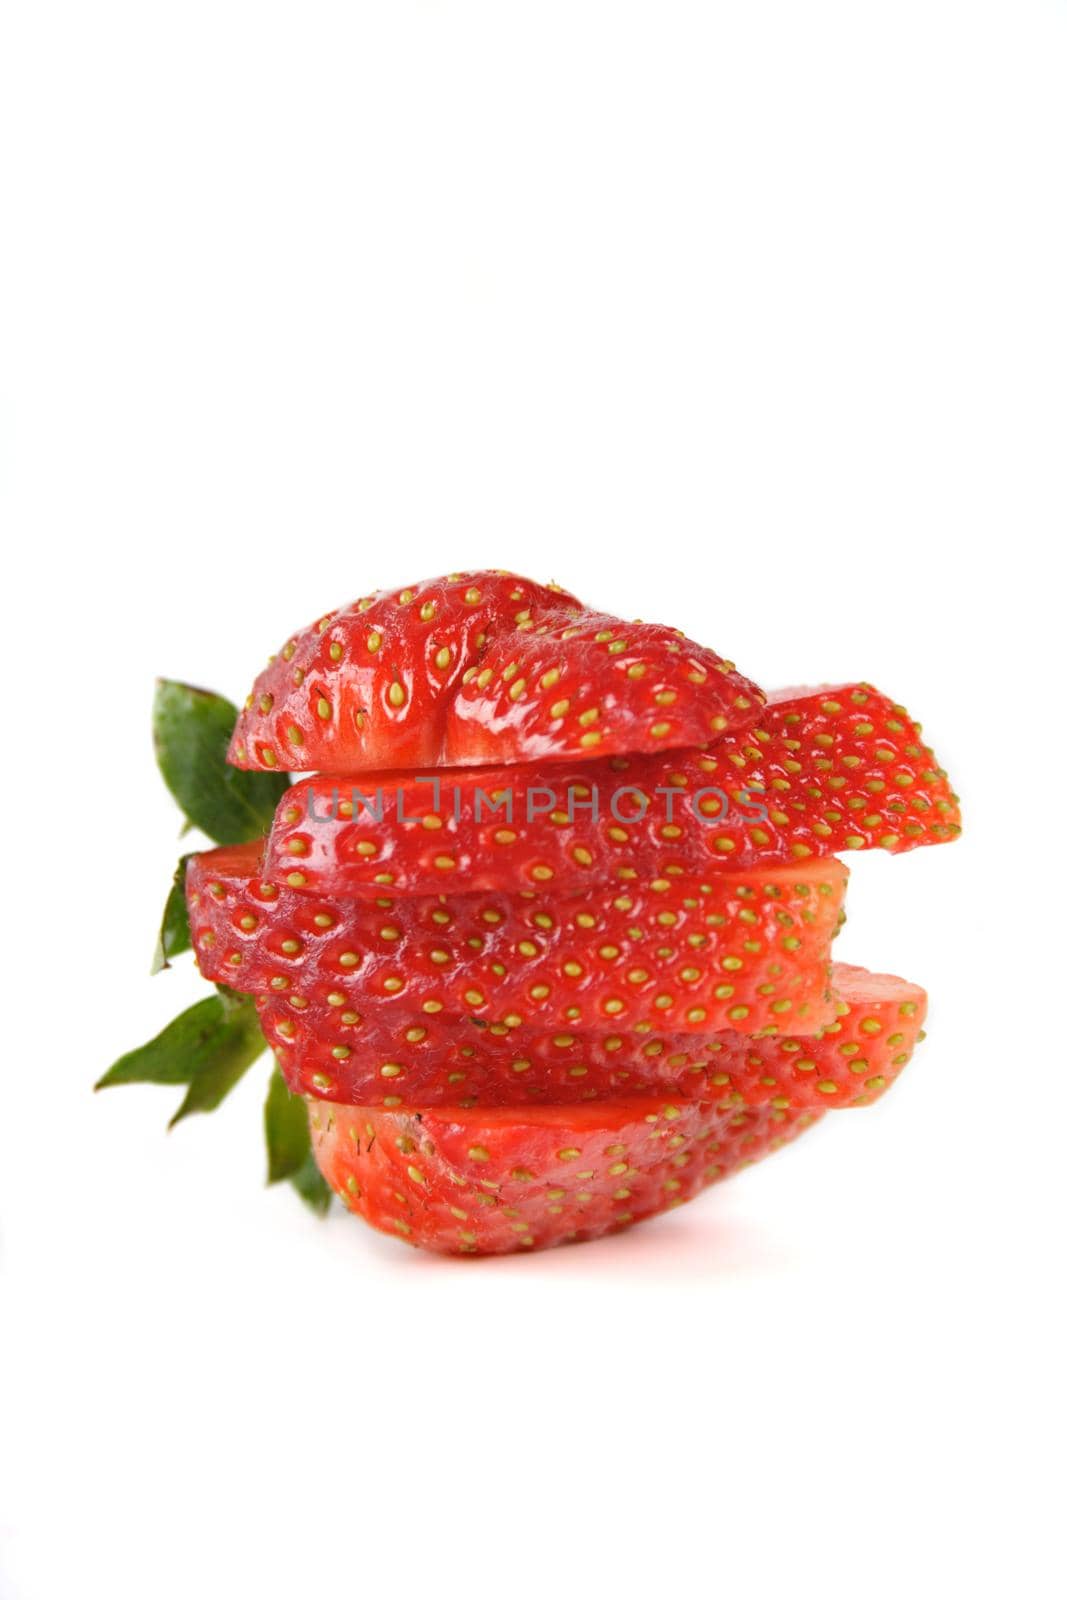 Strawberries by moodboard